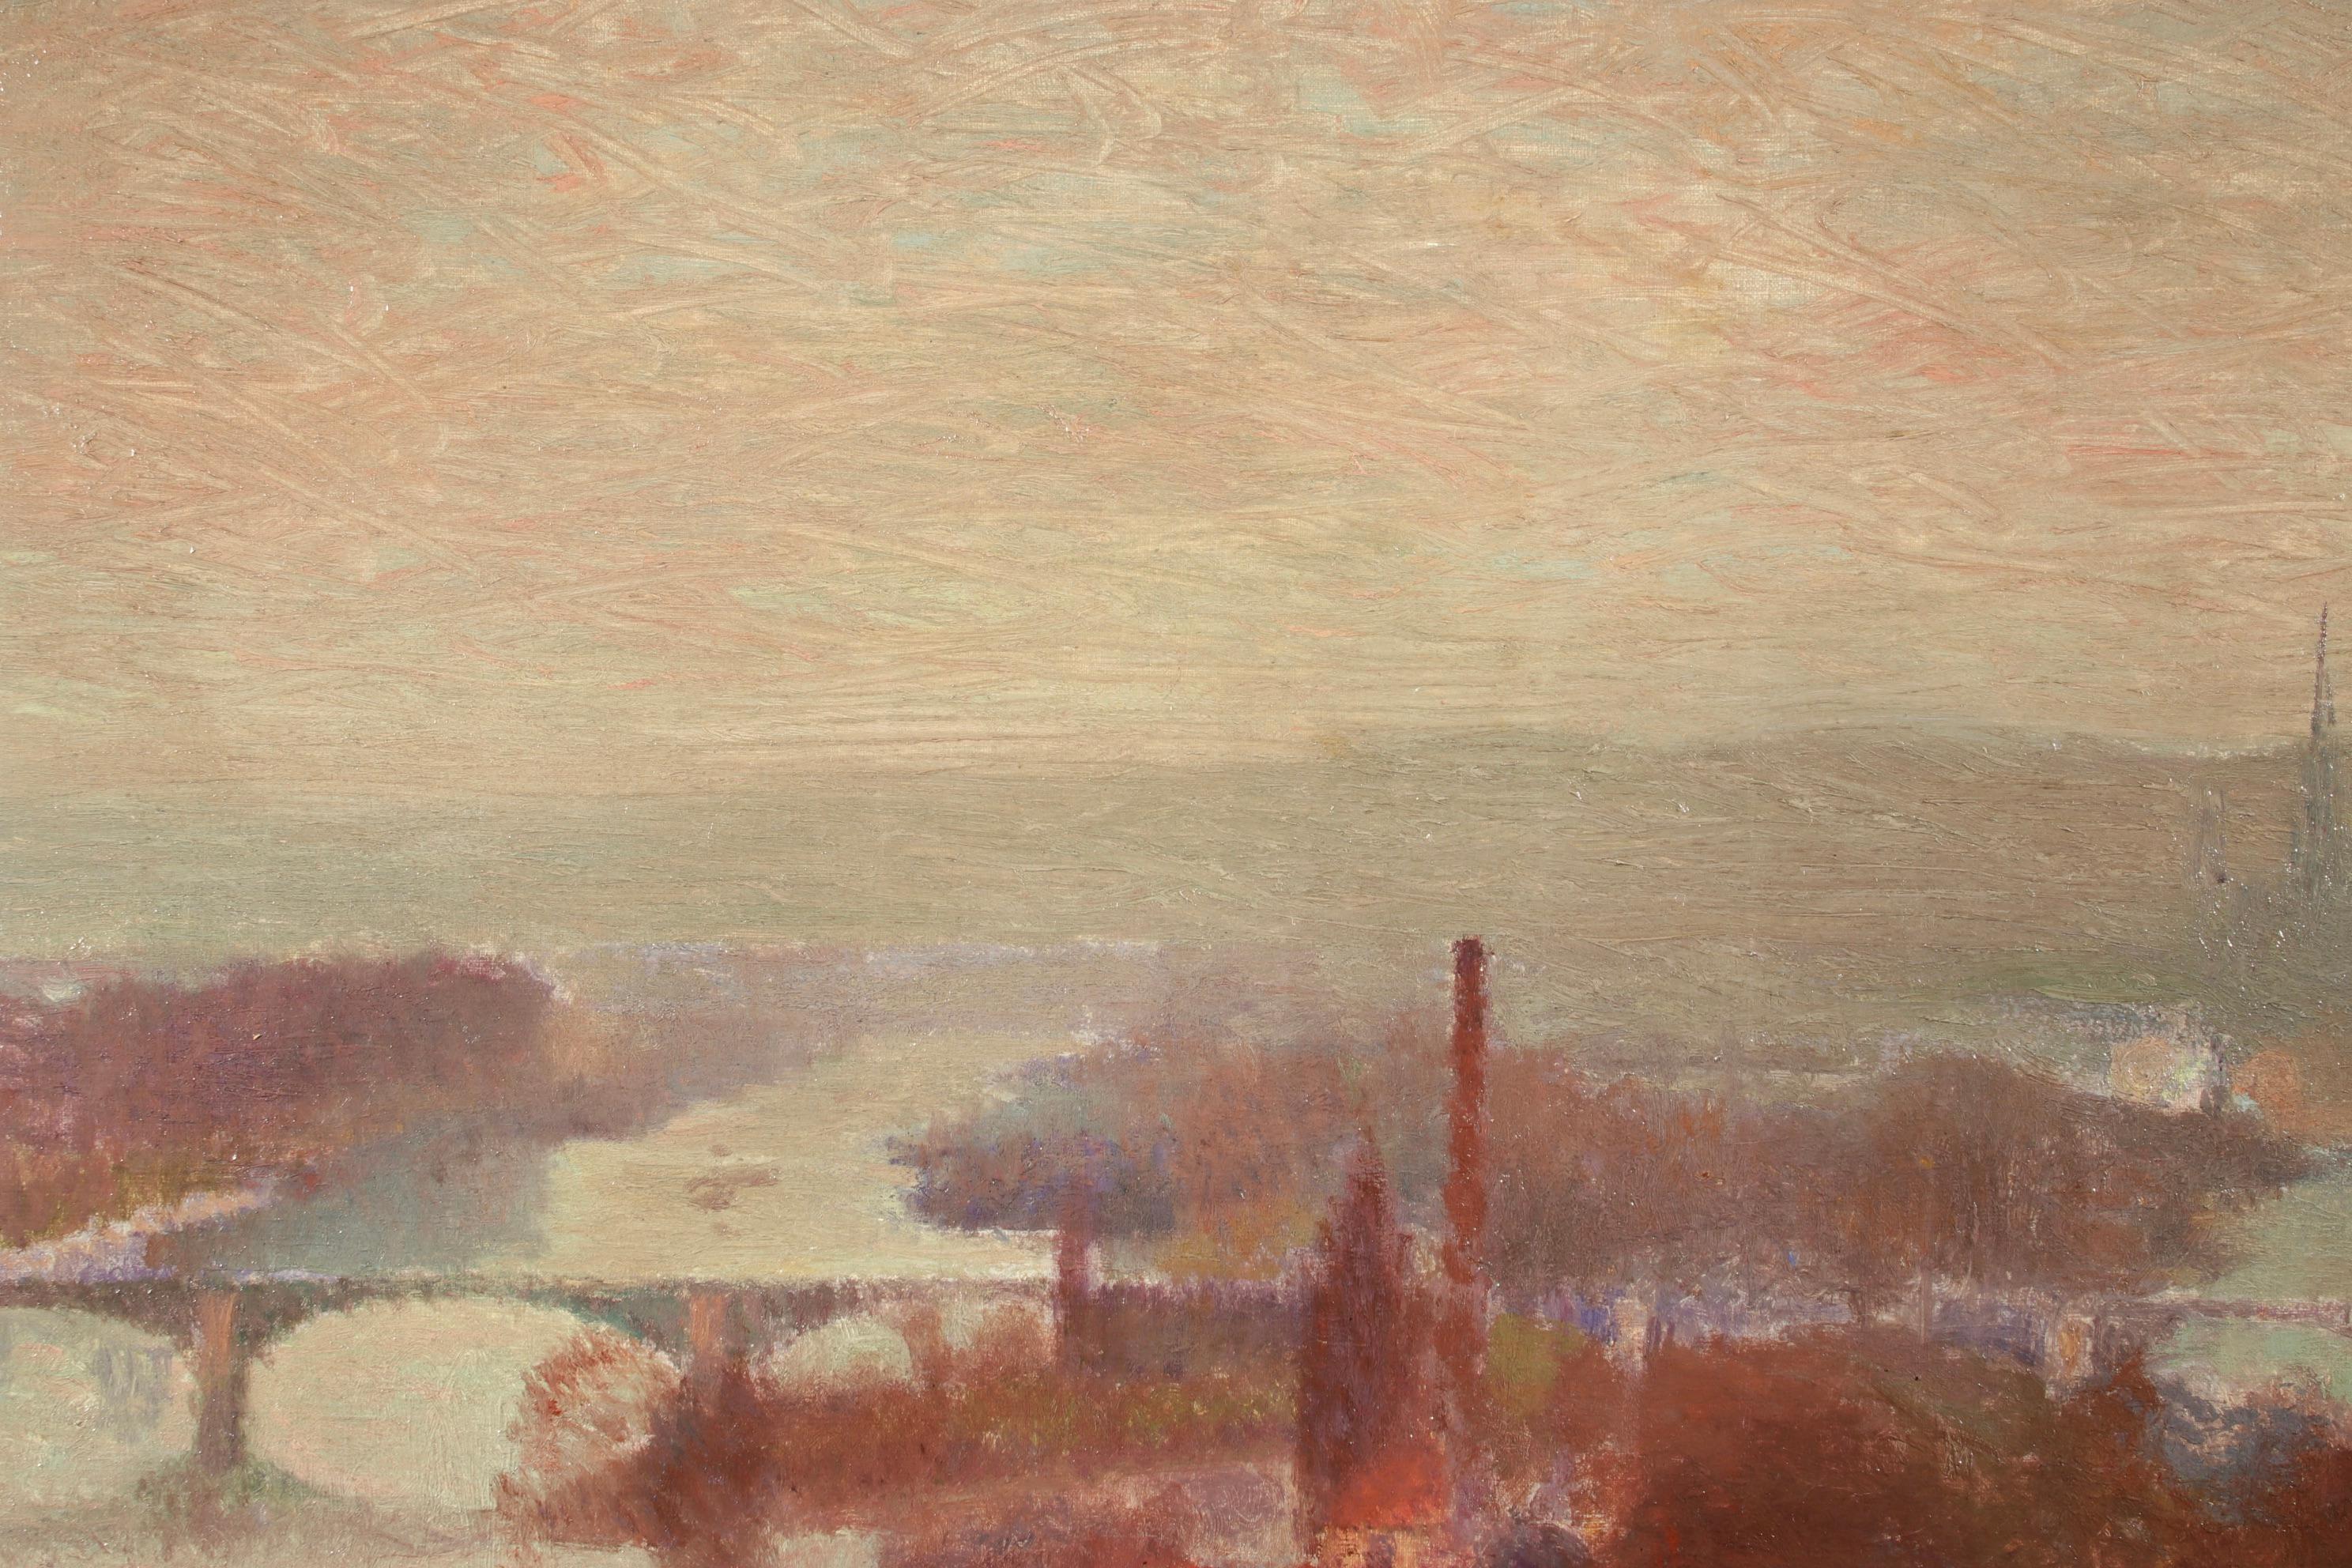 Morning Fog - Rouen - Impressionist Oil, River in Landscape by Joseph Delattre 7